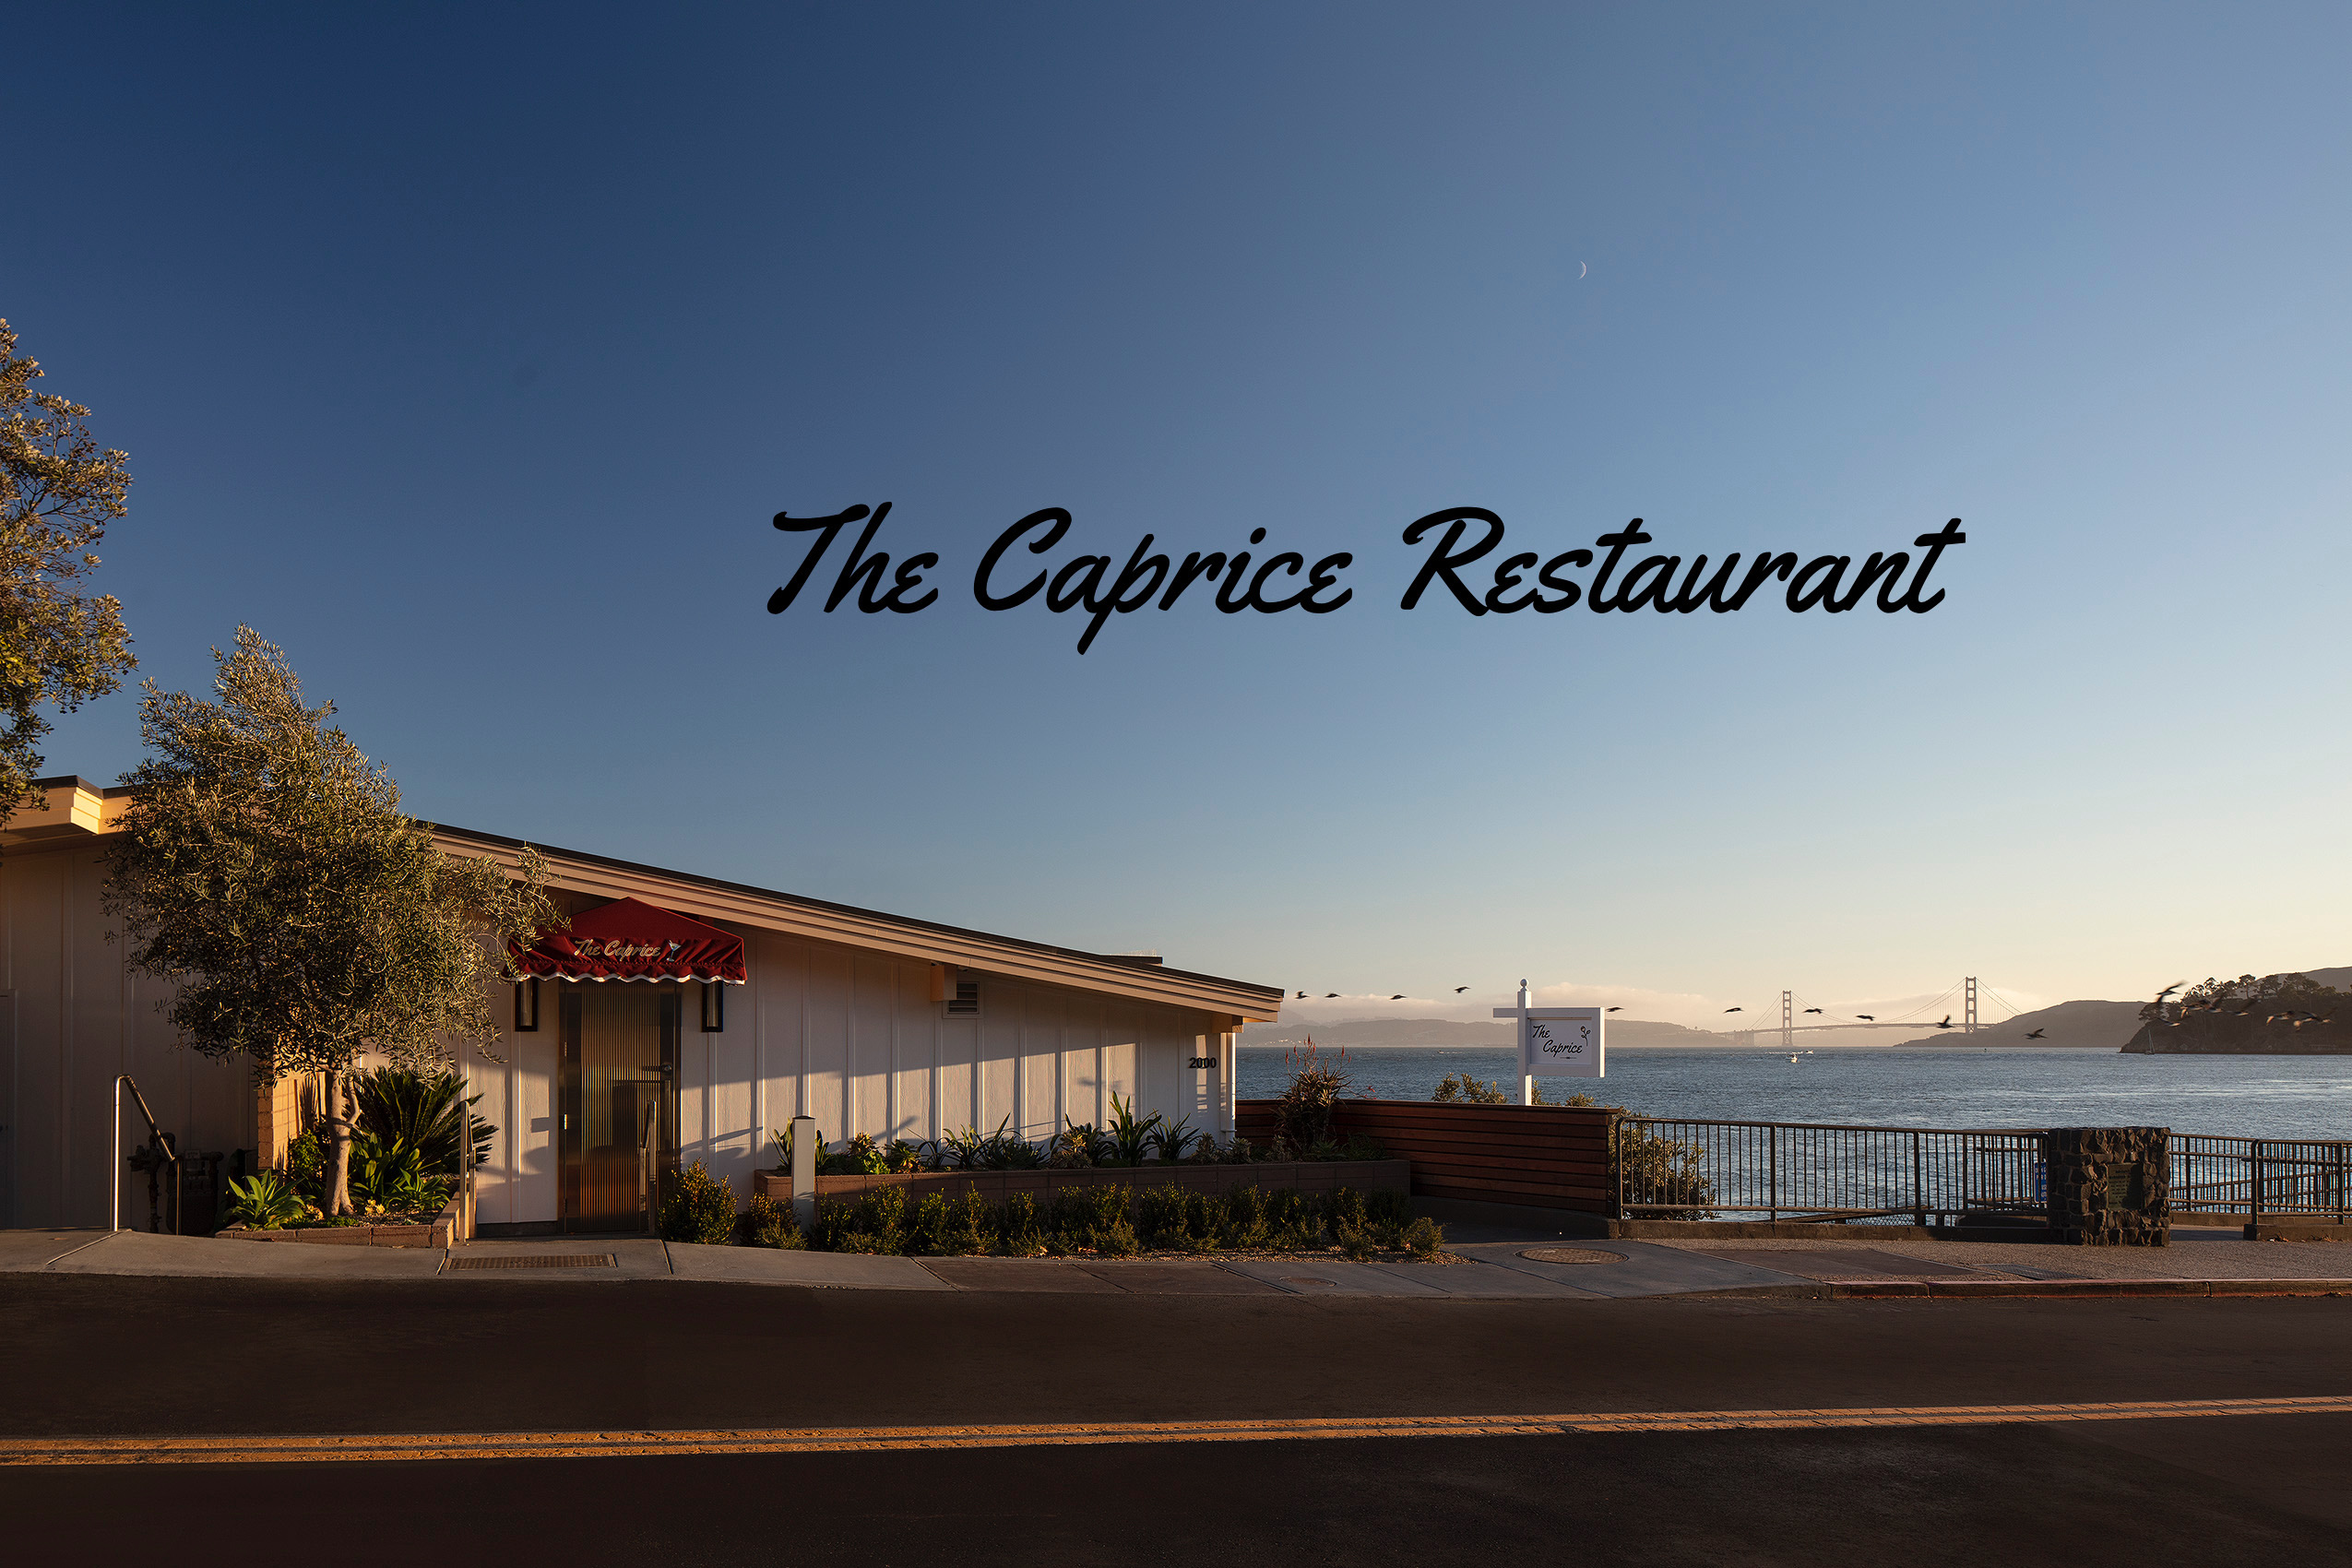 The Caprice Restaurant